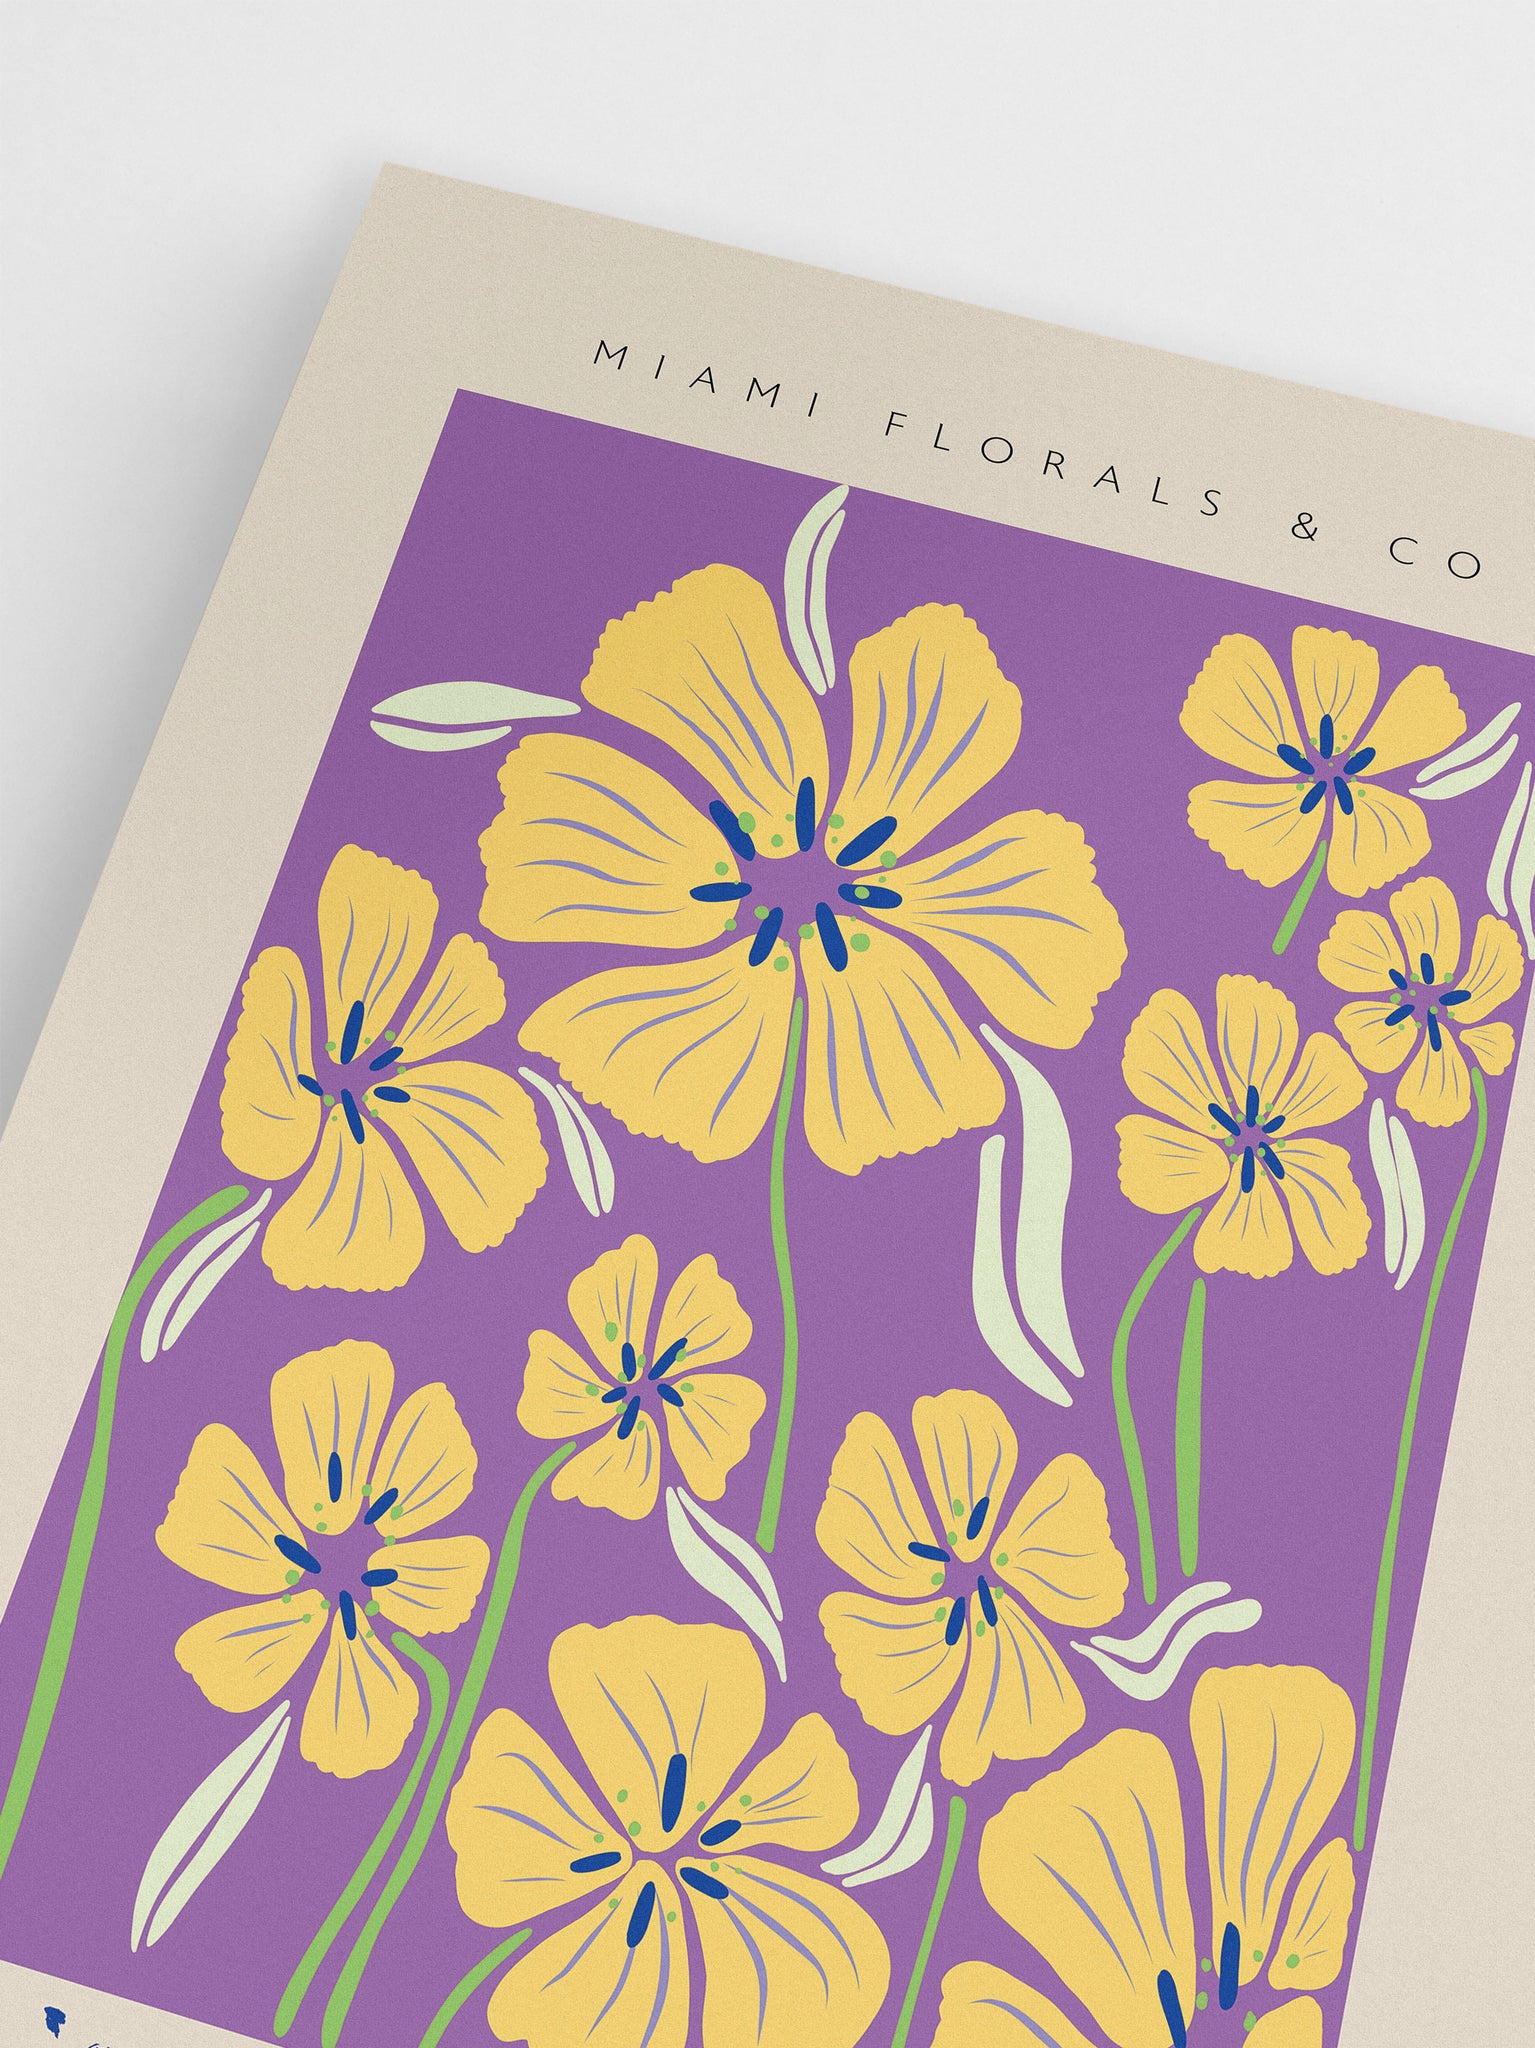 Miami Market Florals Poster